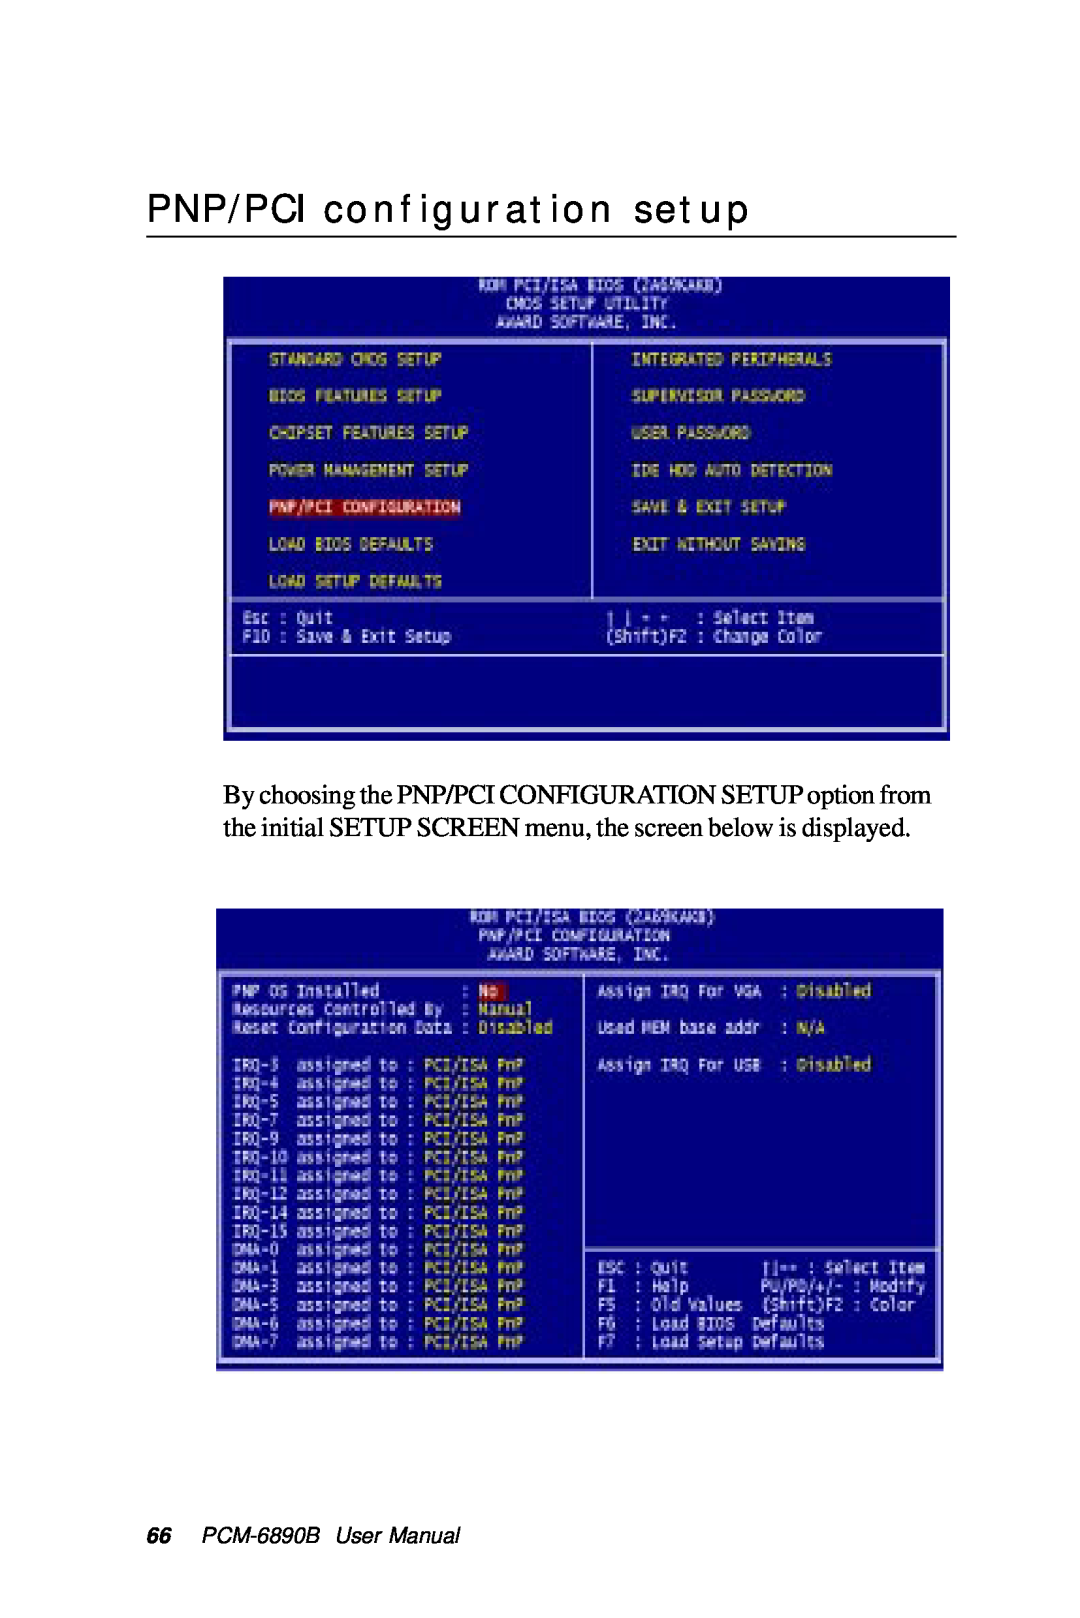 IBM All-in-One FC/Socket 370 Celeron manual PNP/PCI configuration setup, PCM-6890B User Manual 